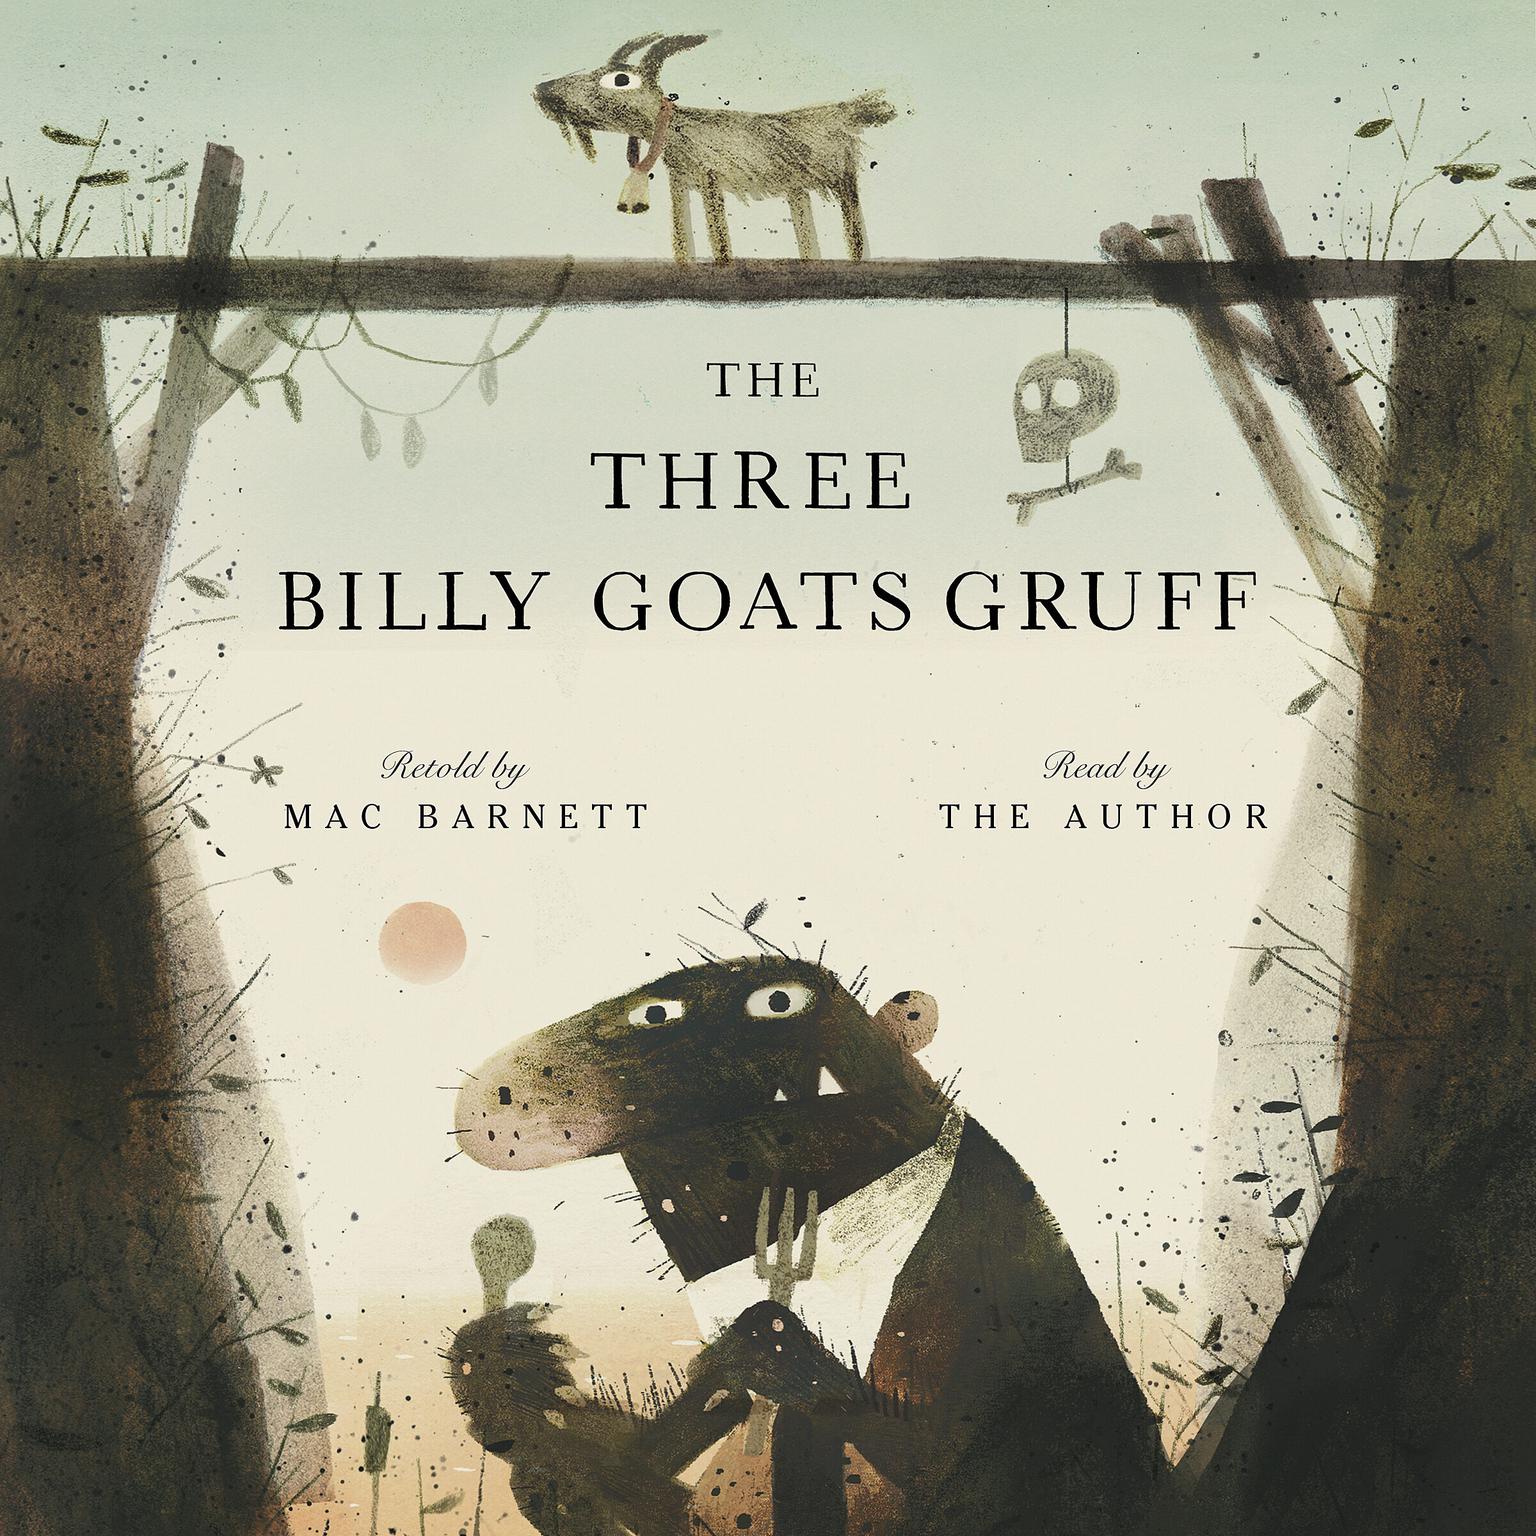 The Three Billy Goats Gruff Audiobook, by Mac Barnett